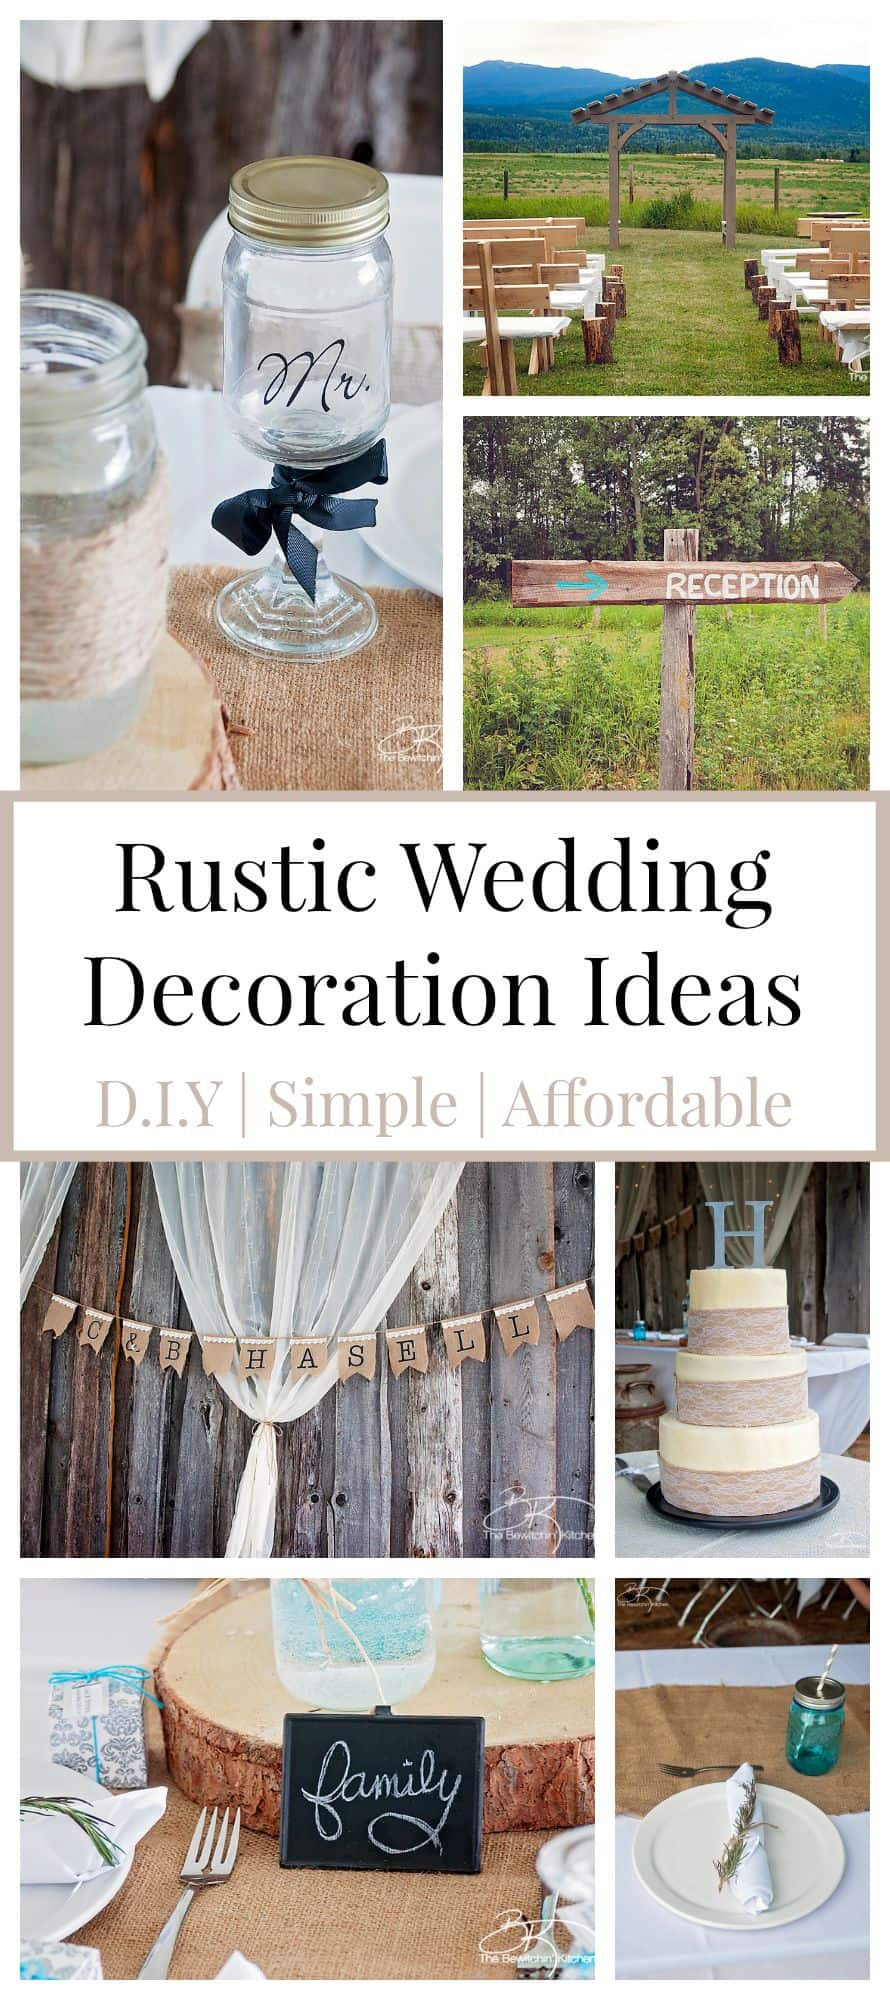 Wedding DIY Projects
 Rustic Wedding Ideas That Are DIY & Affordable